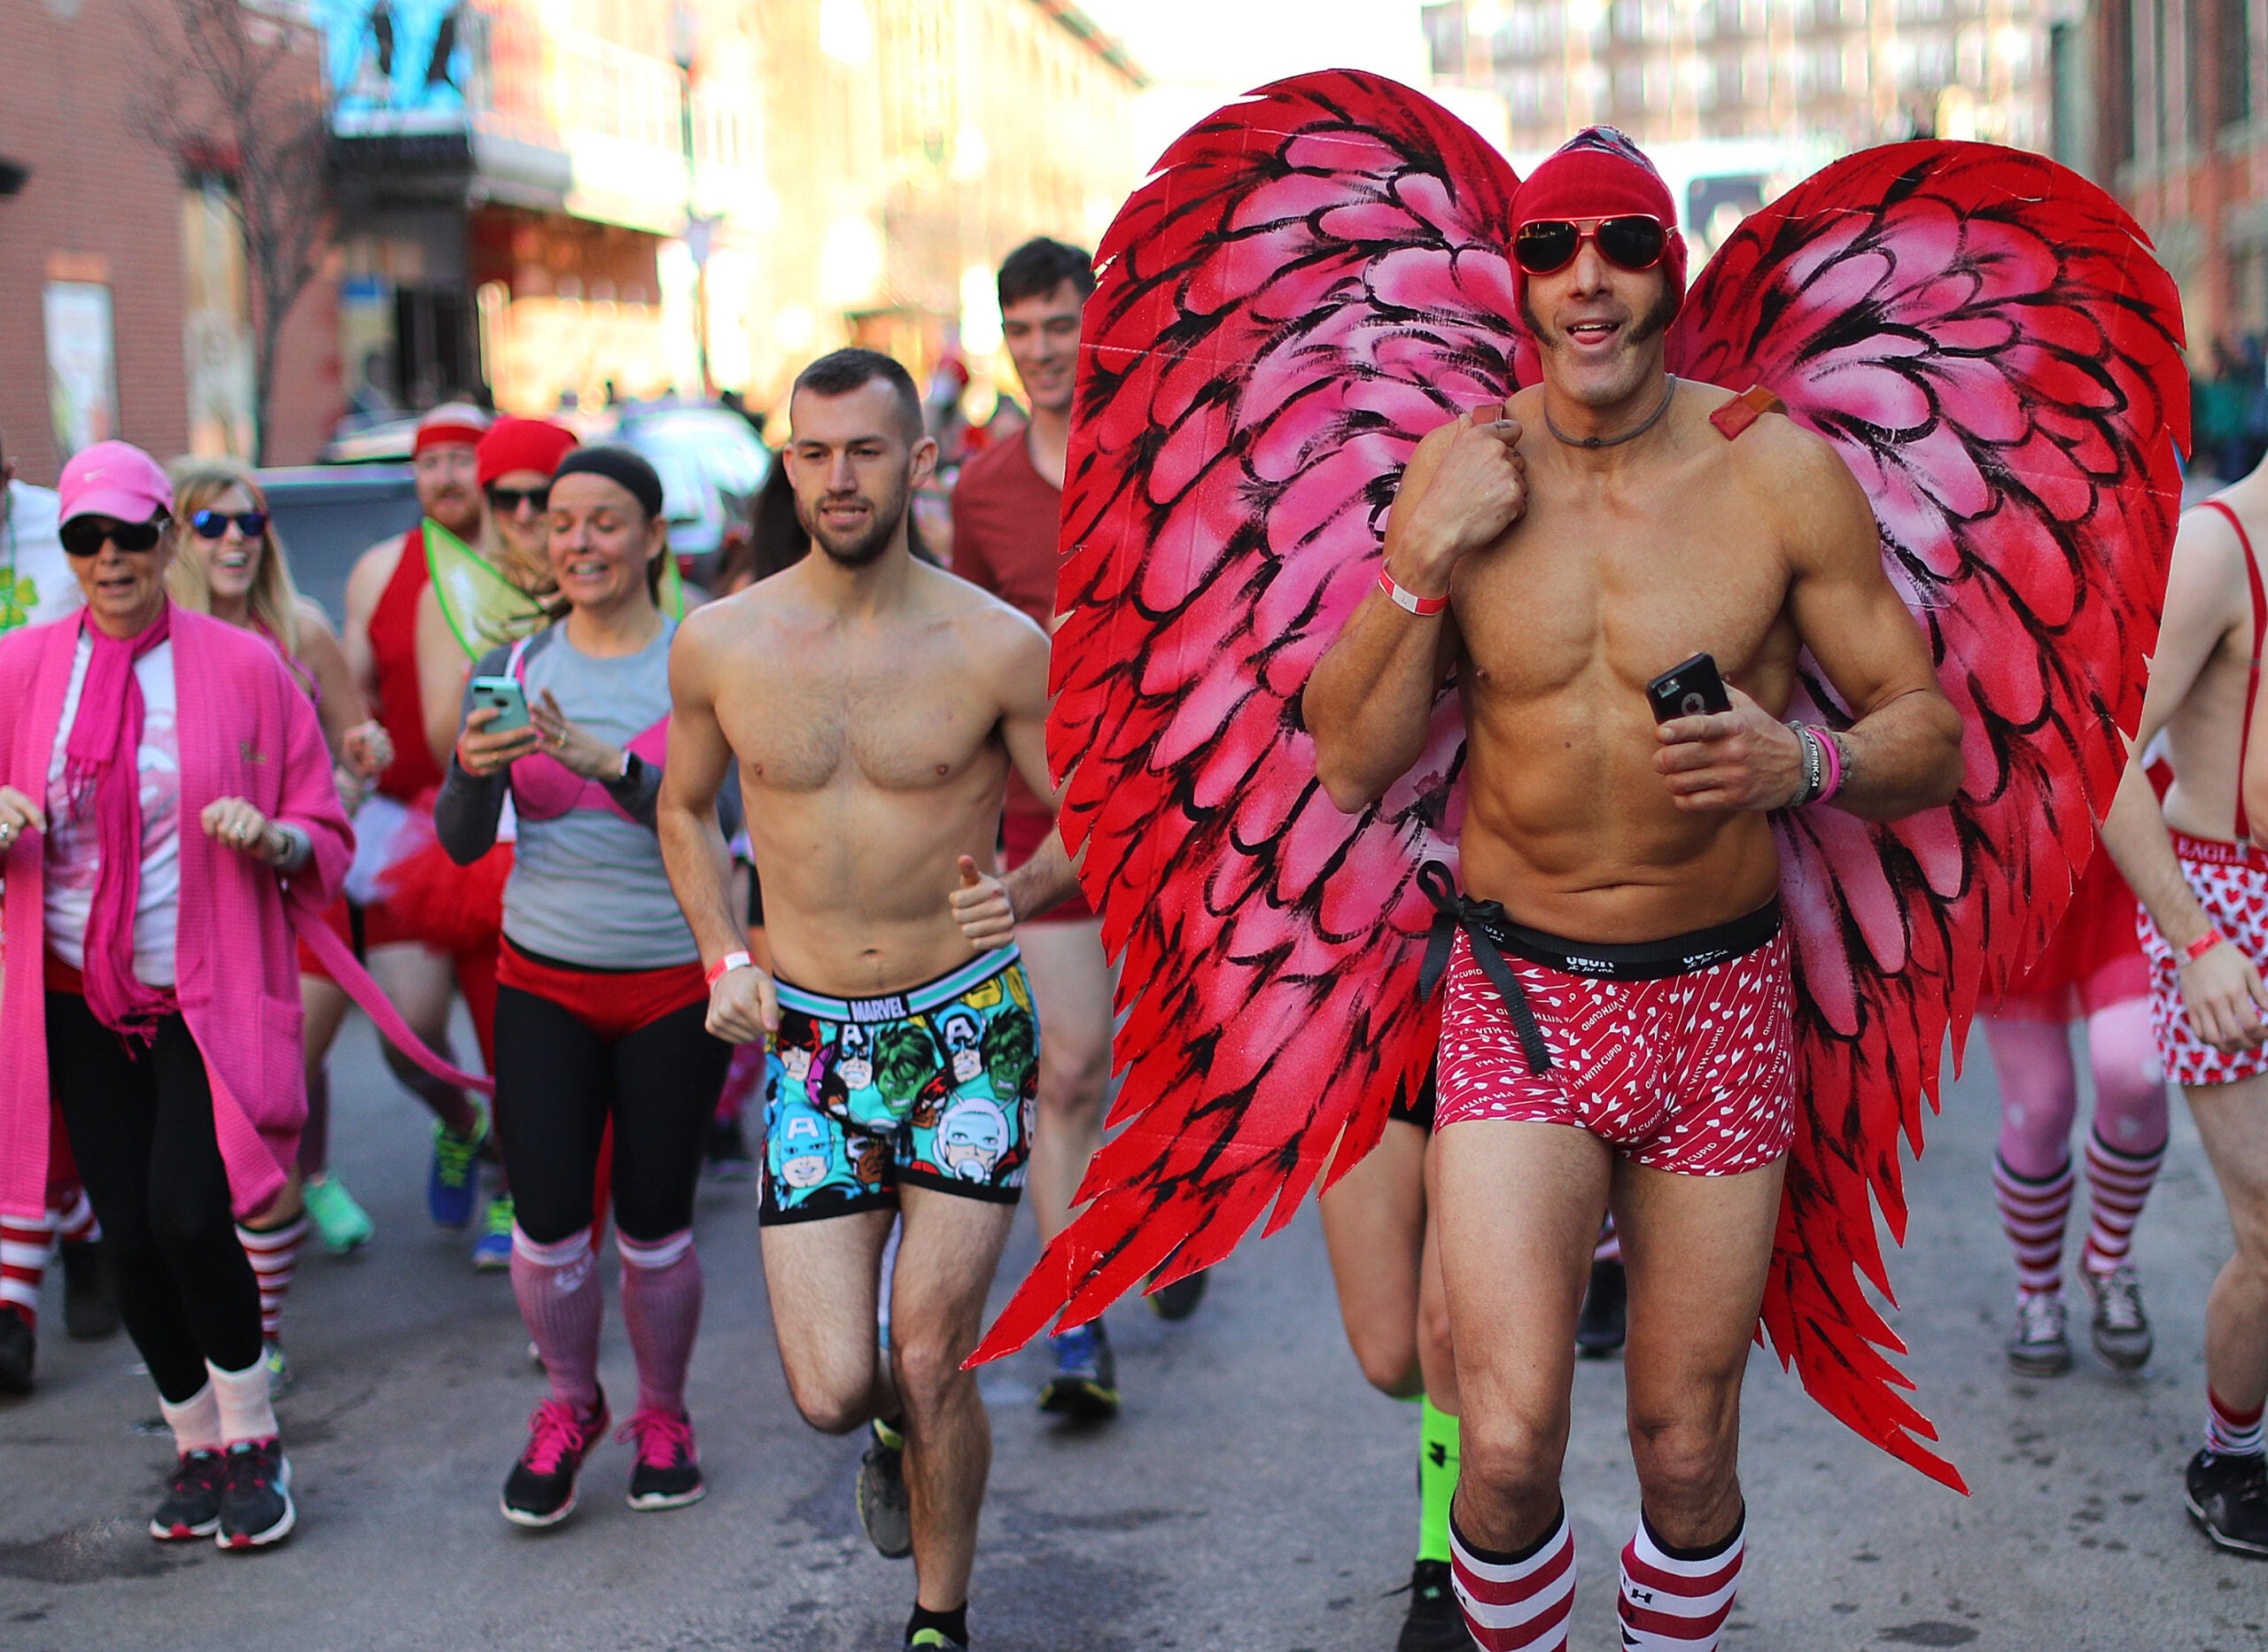 Watch: Boston runners strip down for Cupid's Undie Run